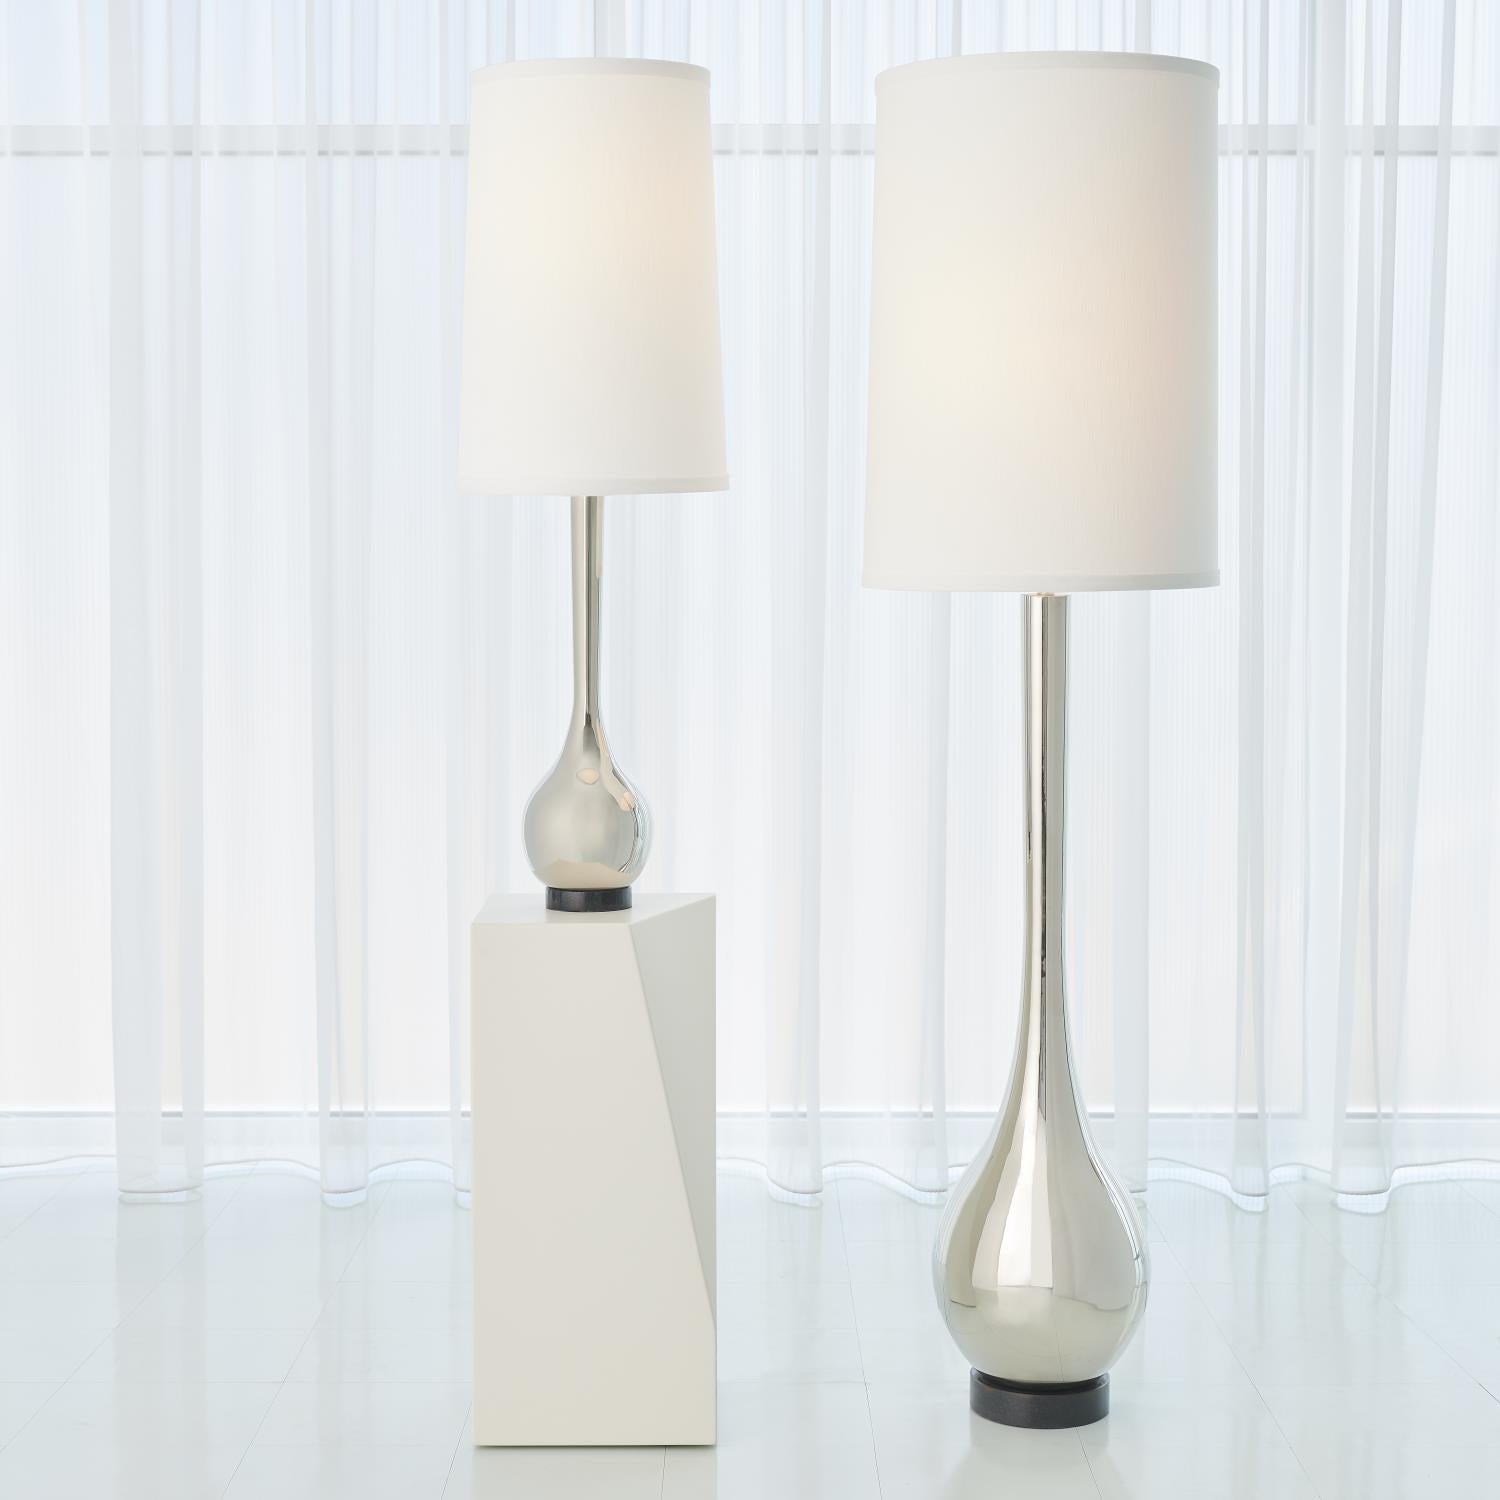 Bulb Vase Table Lamp - Nickel - Grats Decor Interior Design & Build Inc.